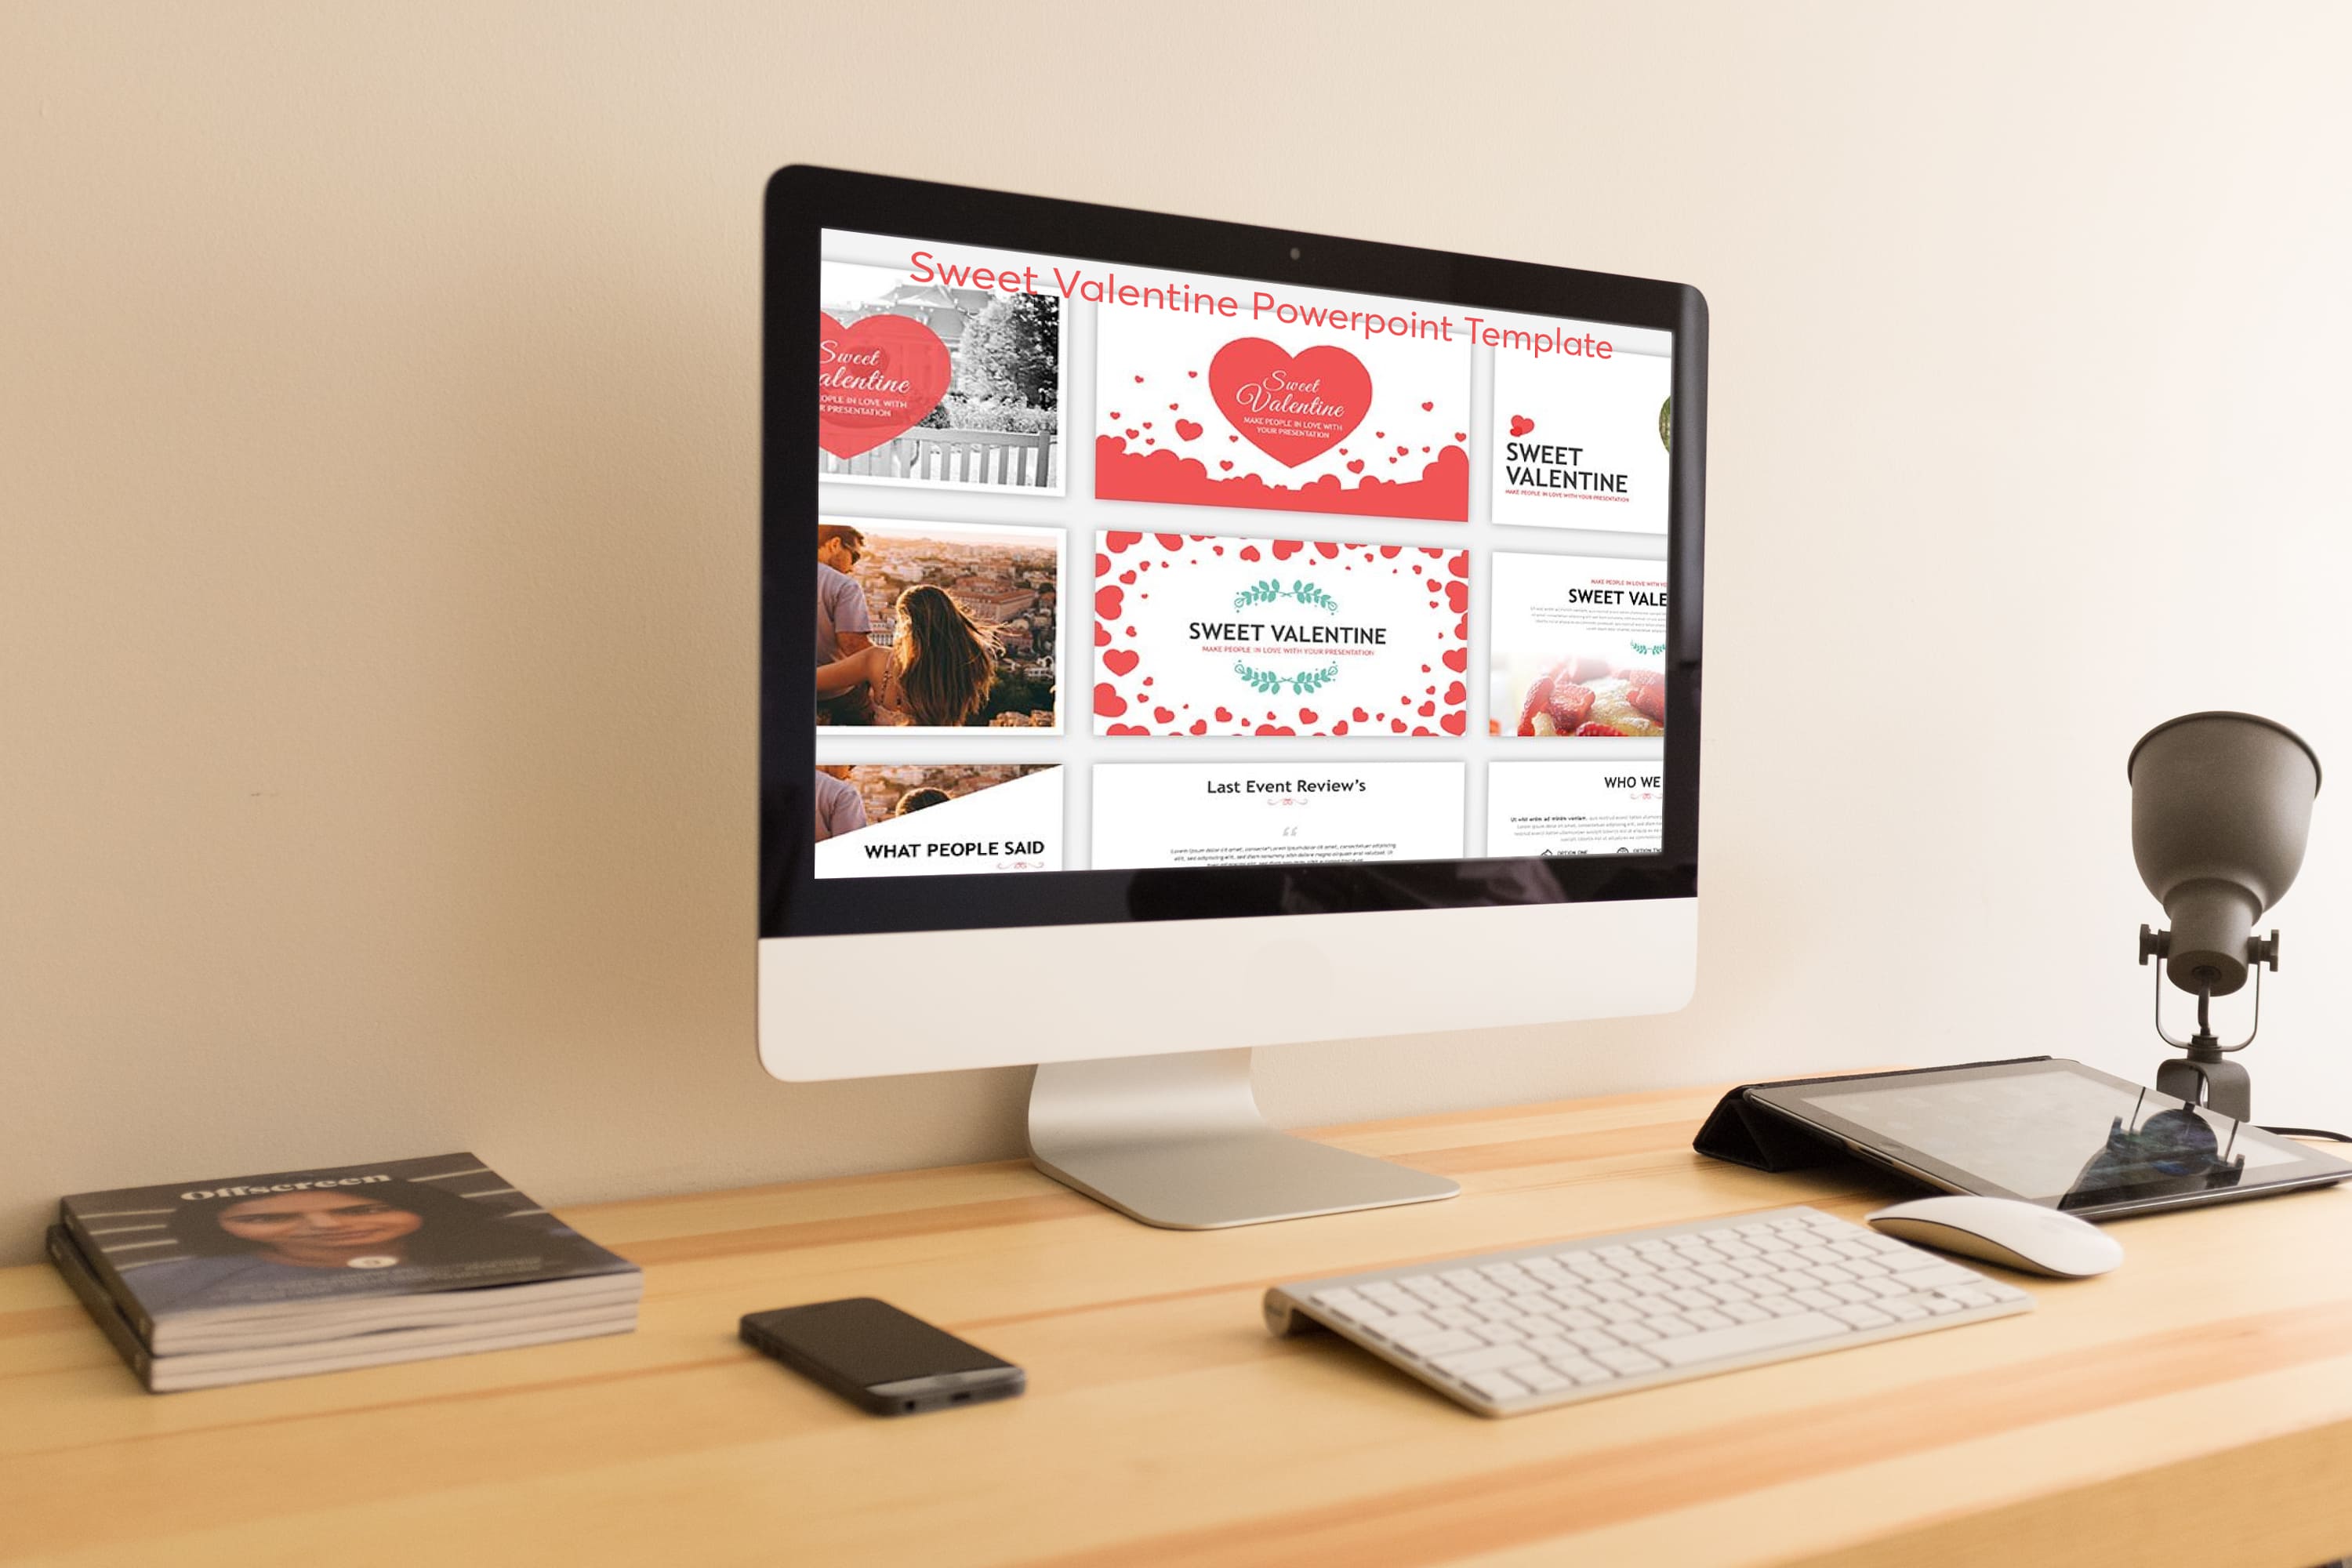 Sweet Valentine Powerpoint Template - desktop.